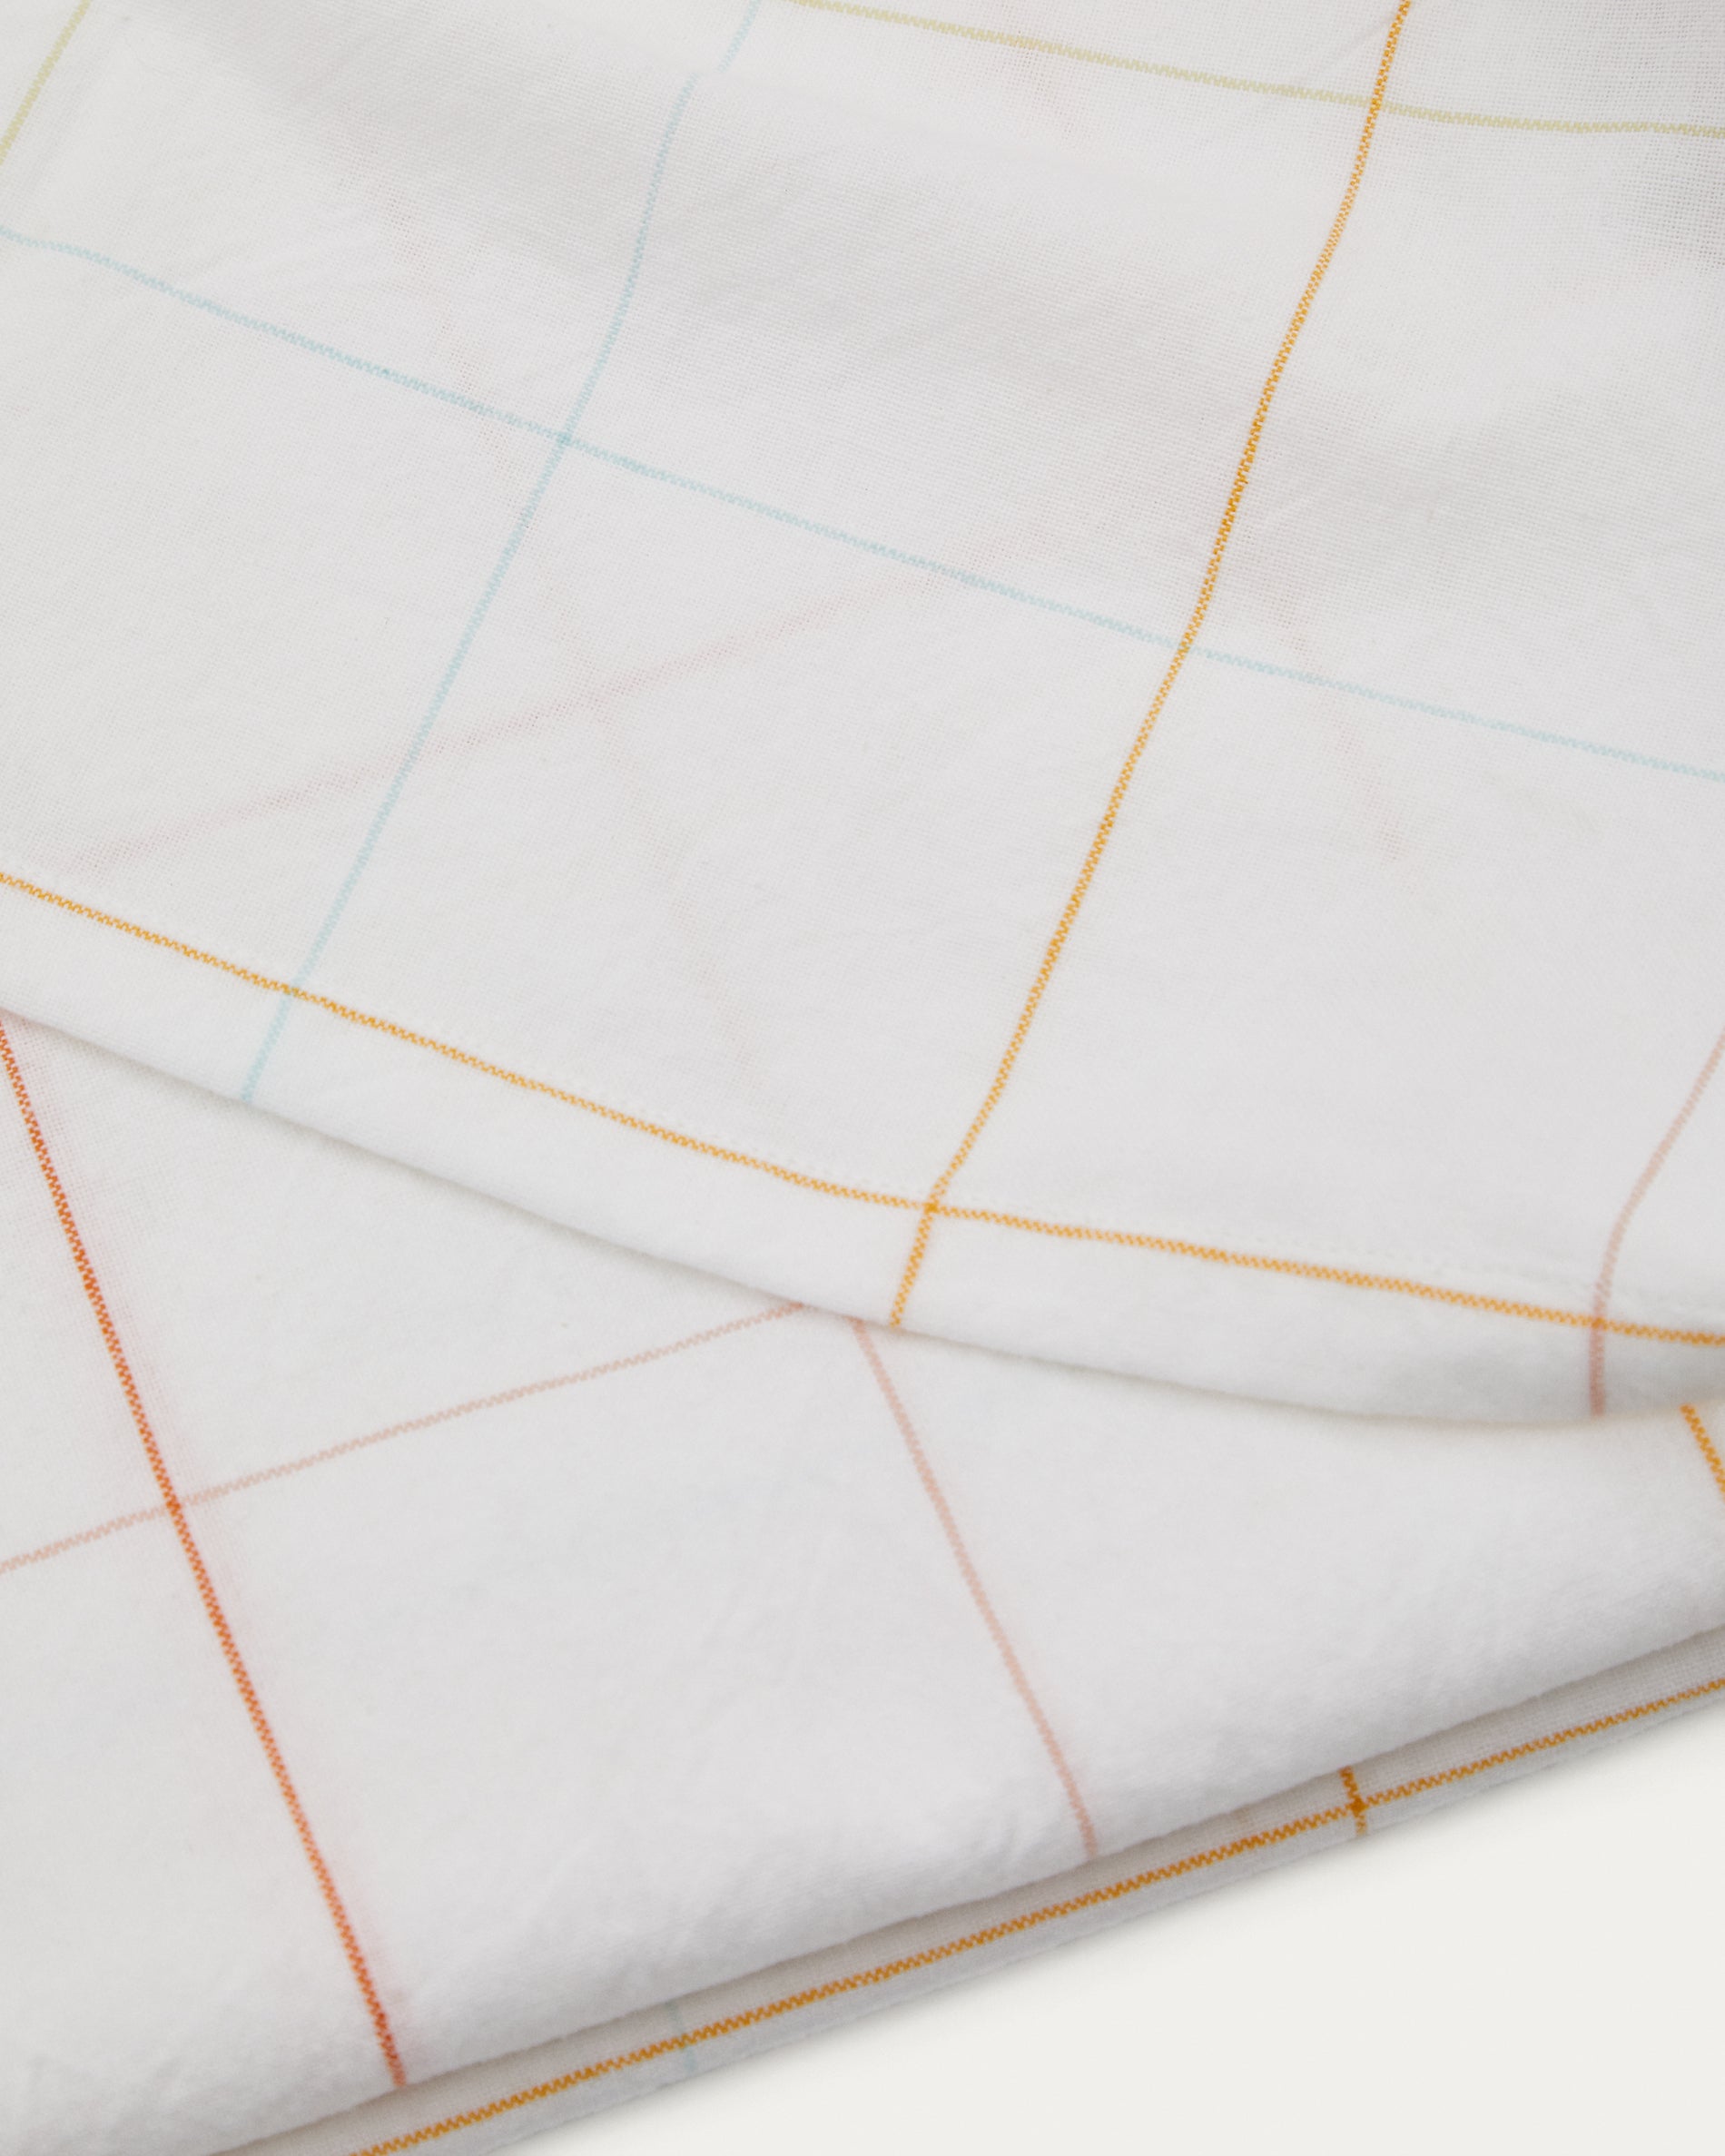 Melis multicolored checkered 100% cotton tablecloth 150 x 250 cm